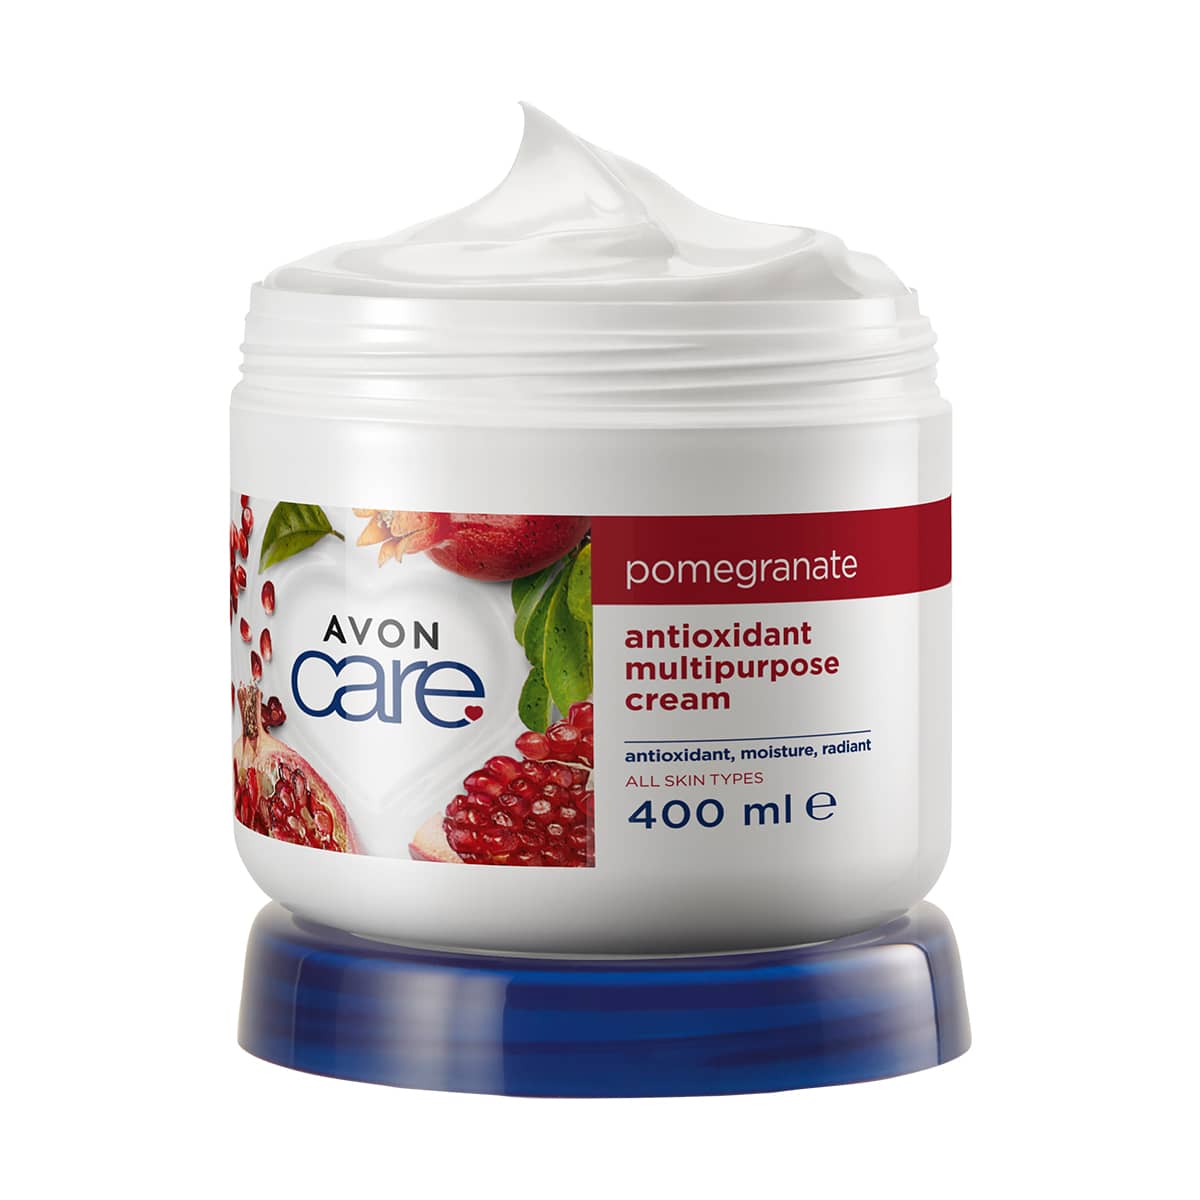 Avon Care Pomegranate Multipurpose Cream 400ml